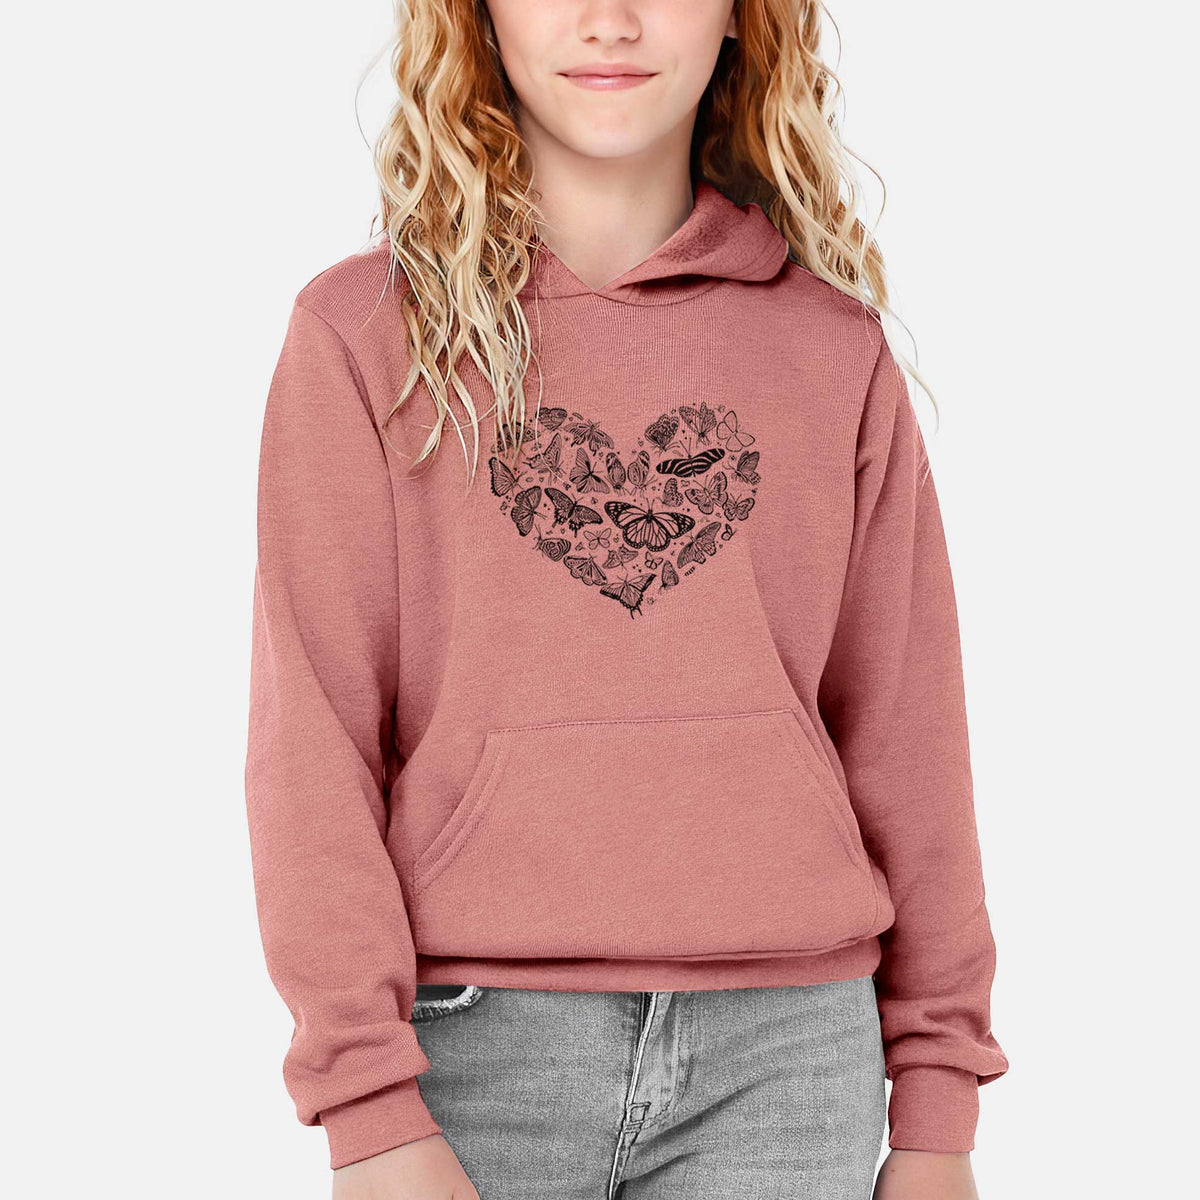 Heart Full of Butterflies - Youth Hoodie Sweatshirt